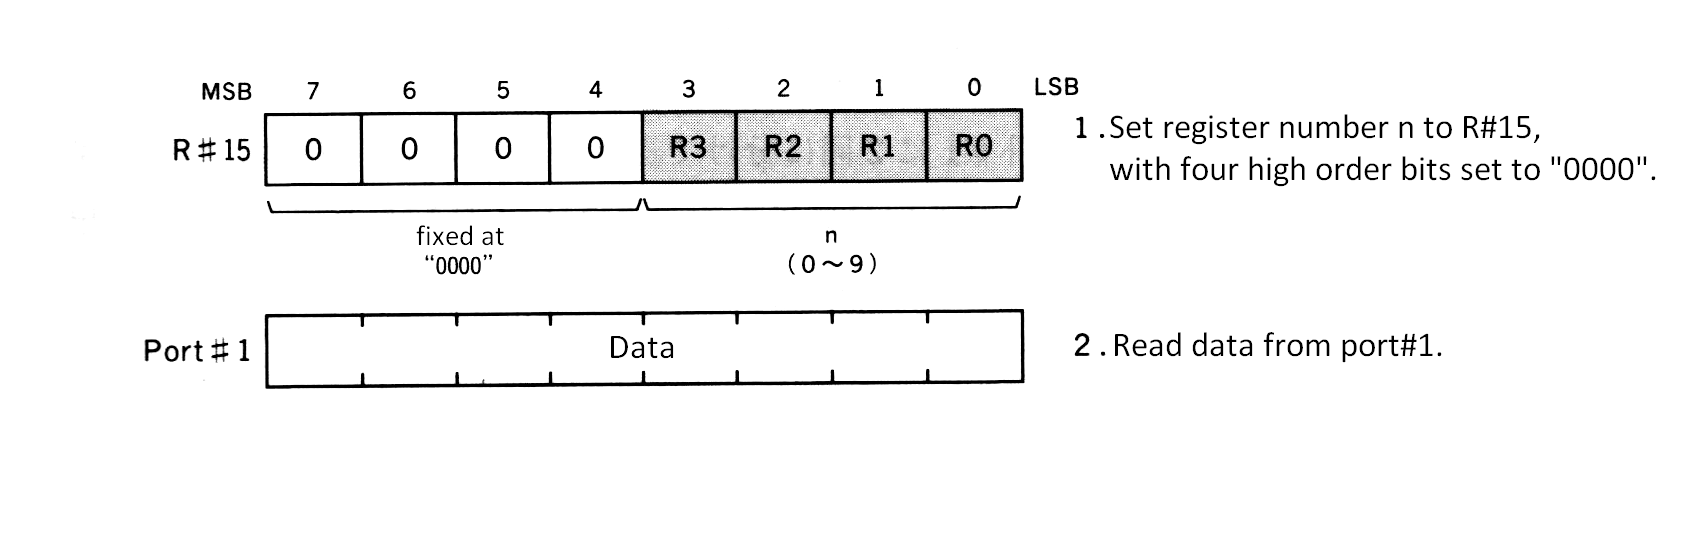 Figure 4.6